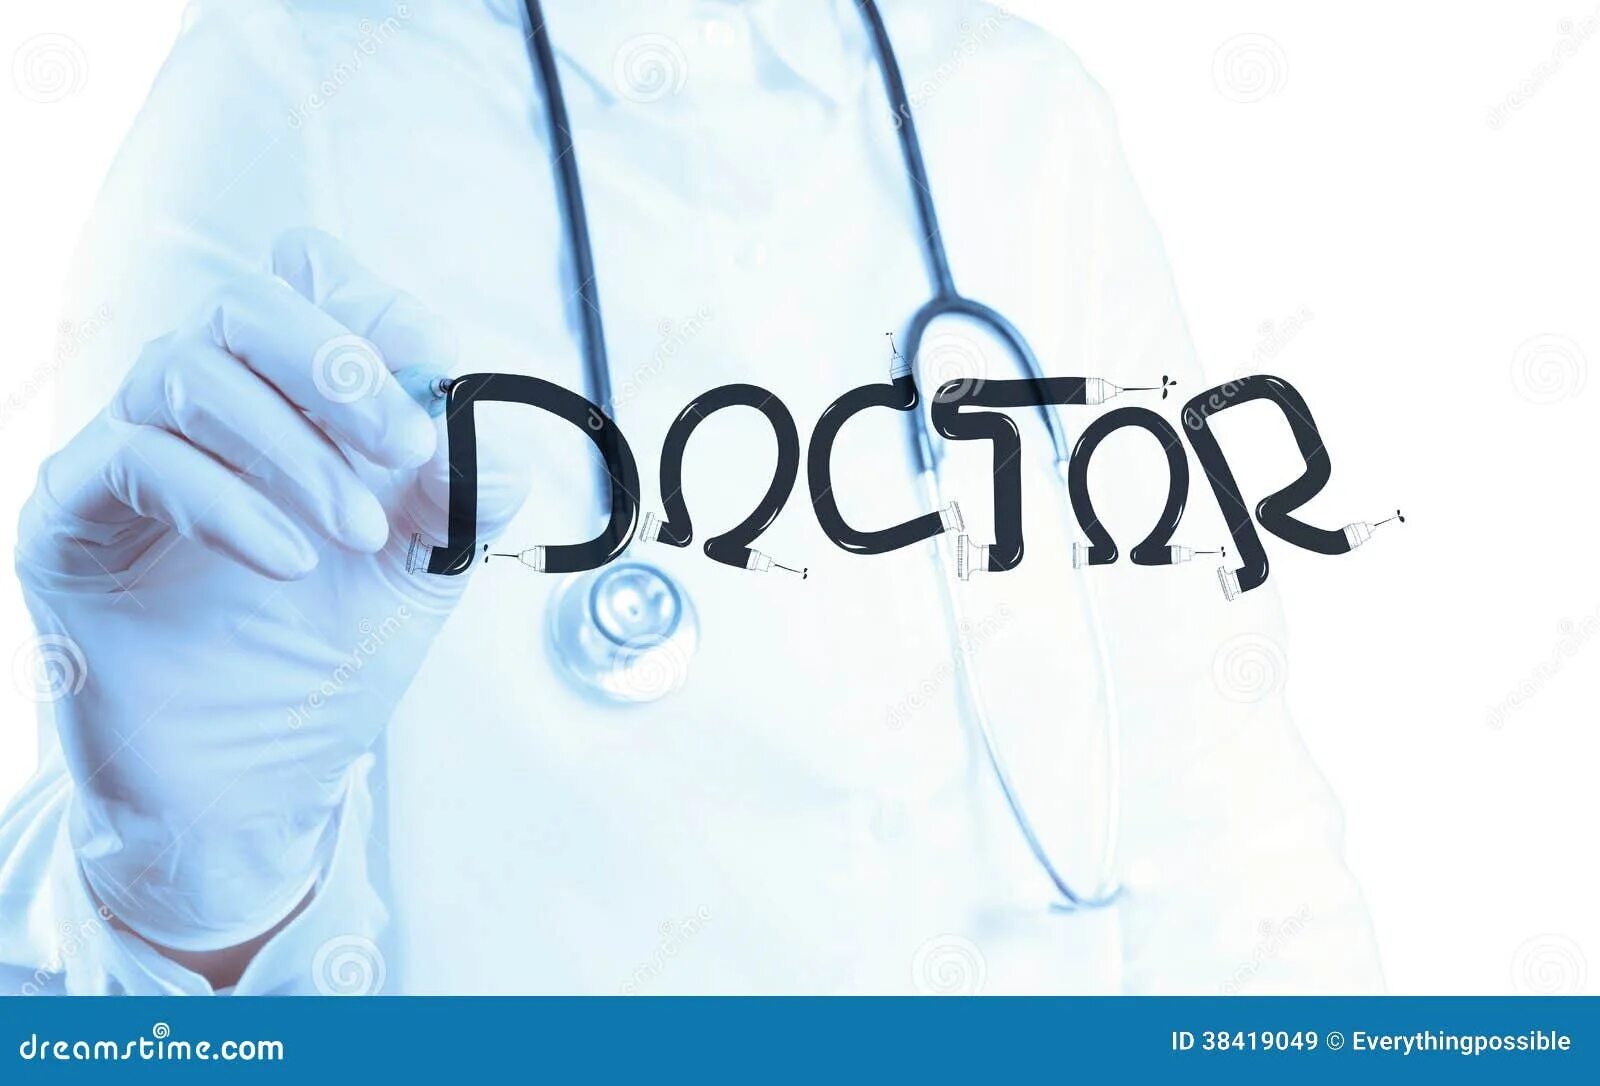 Найти слова доктор. Слово медик. Слово врач. Слово врча. Слова врач надпись.